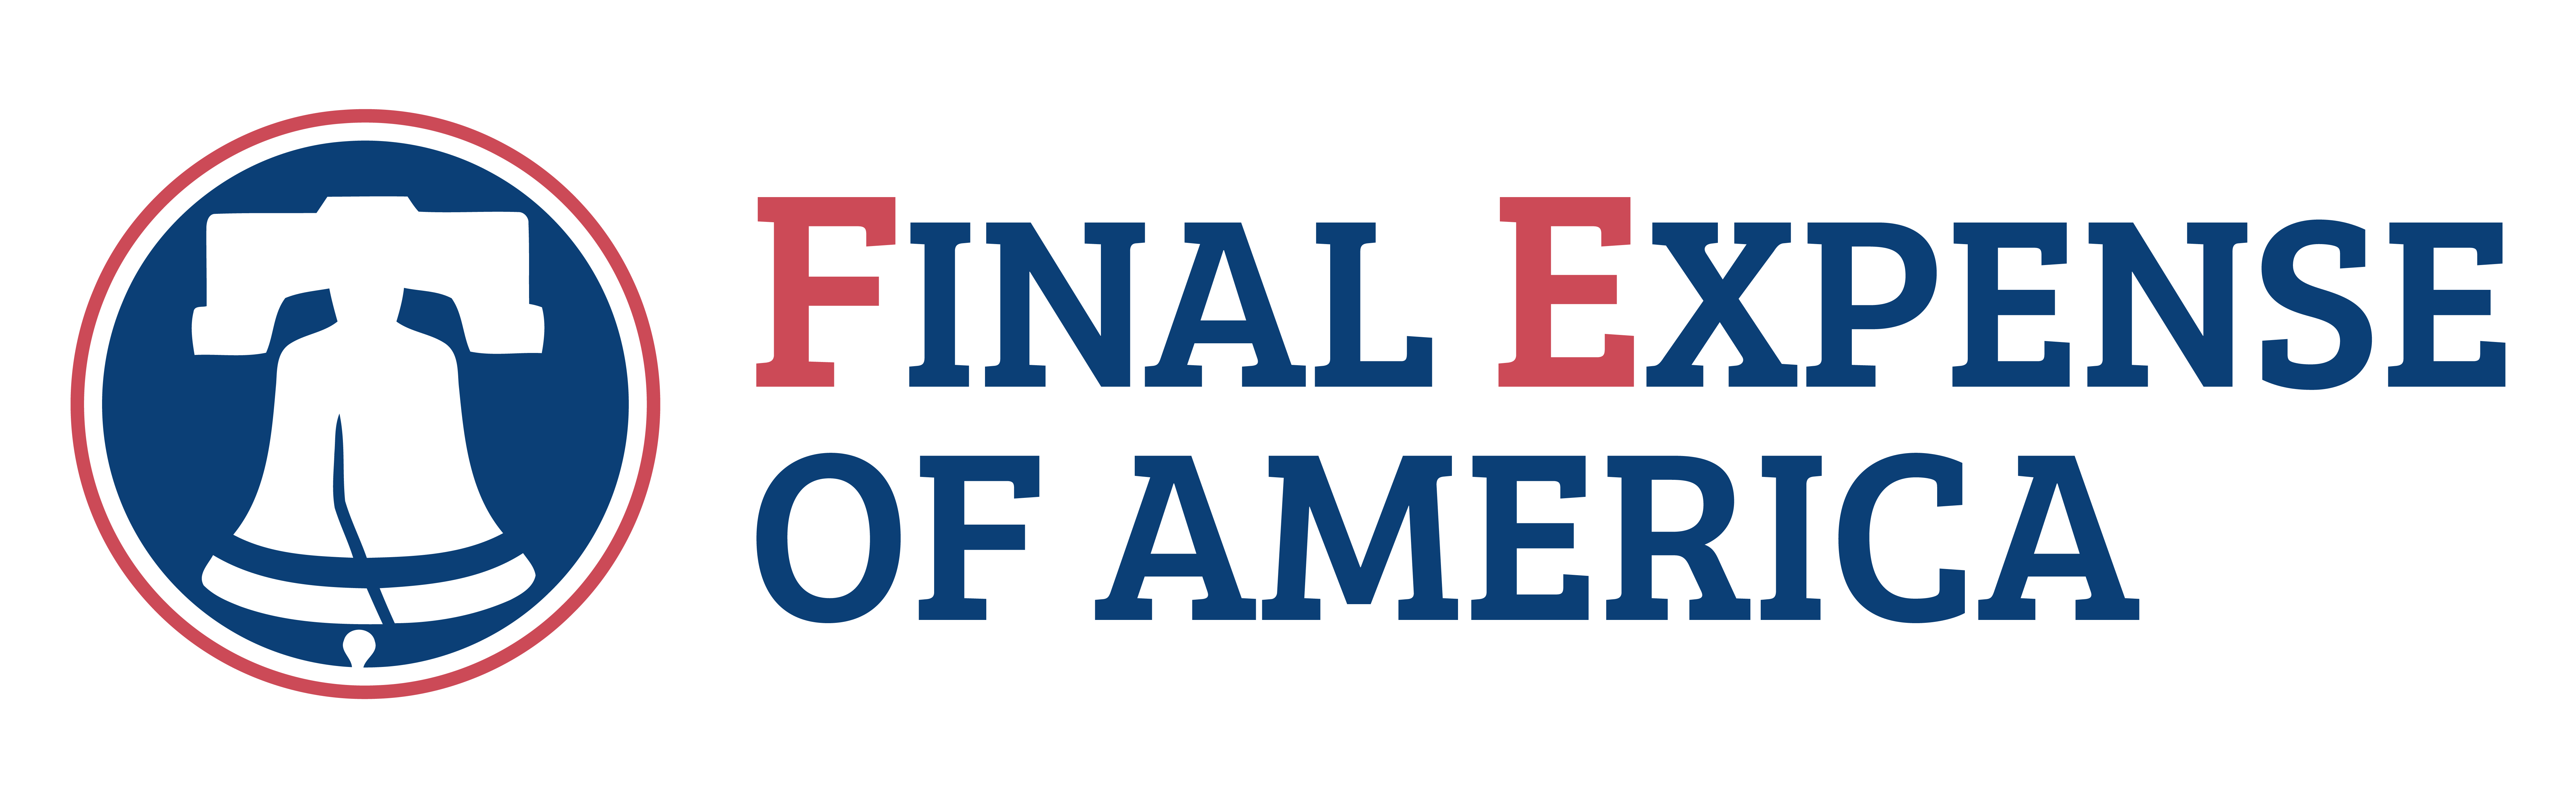 final expense of america logo